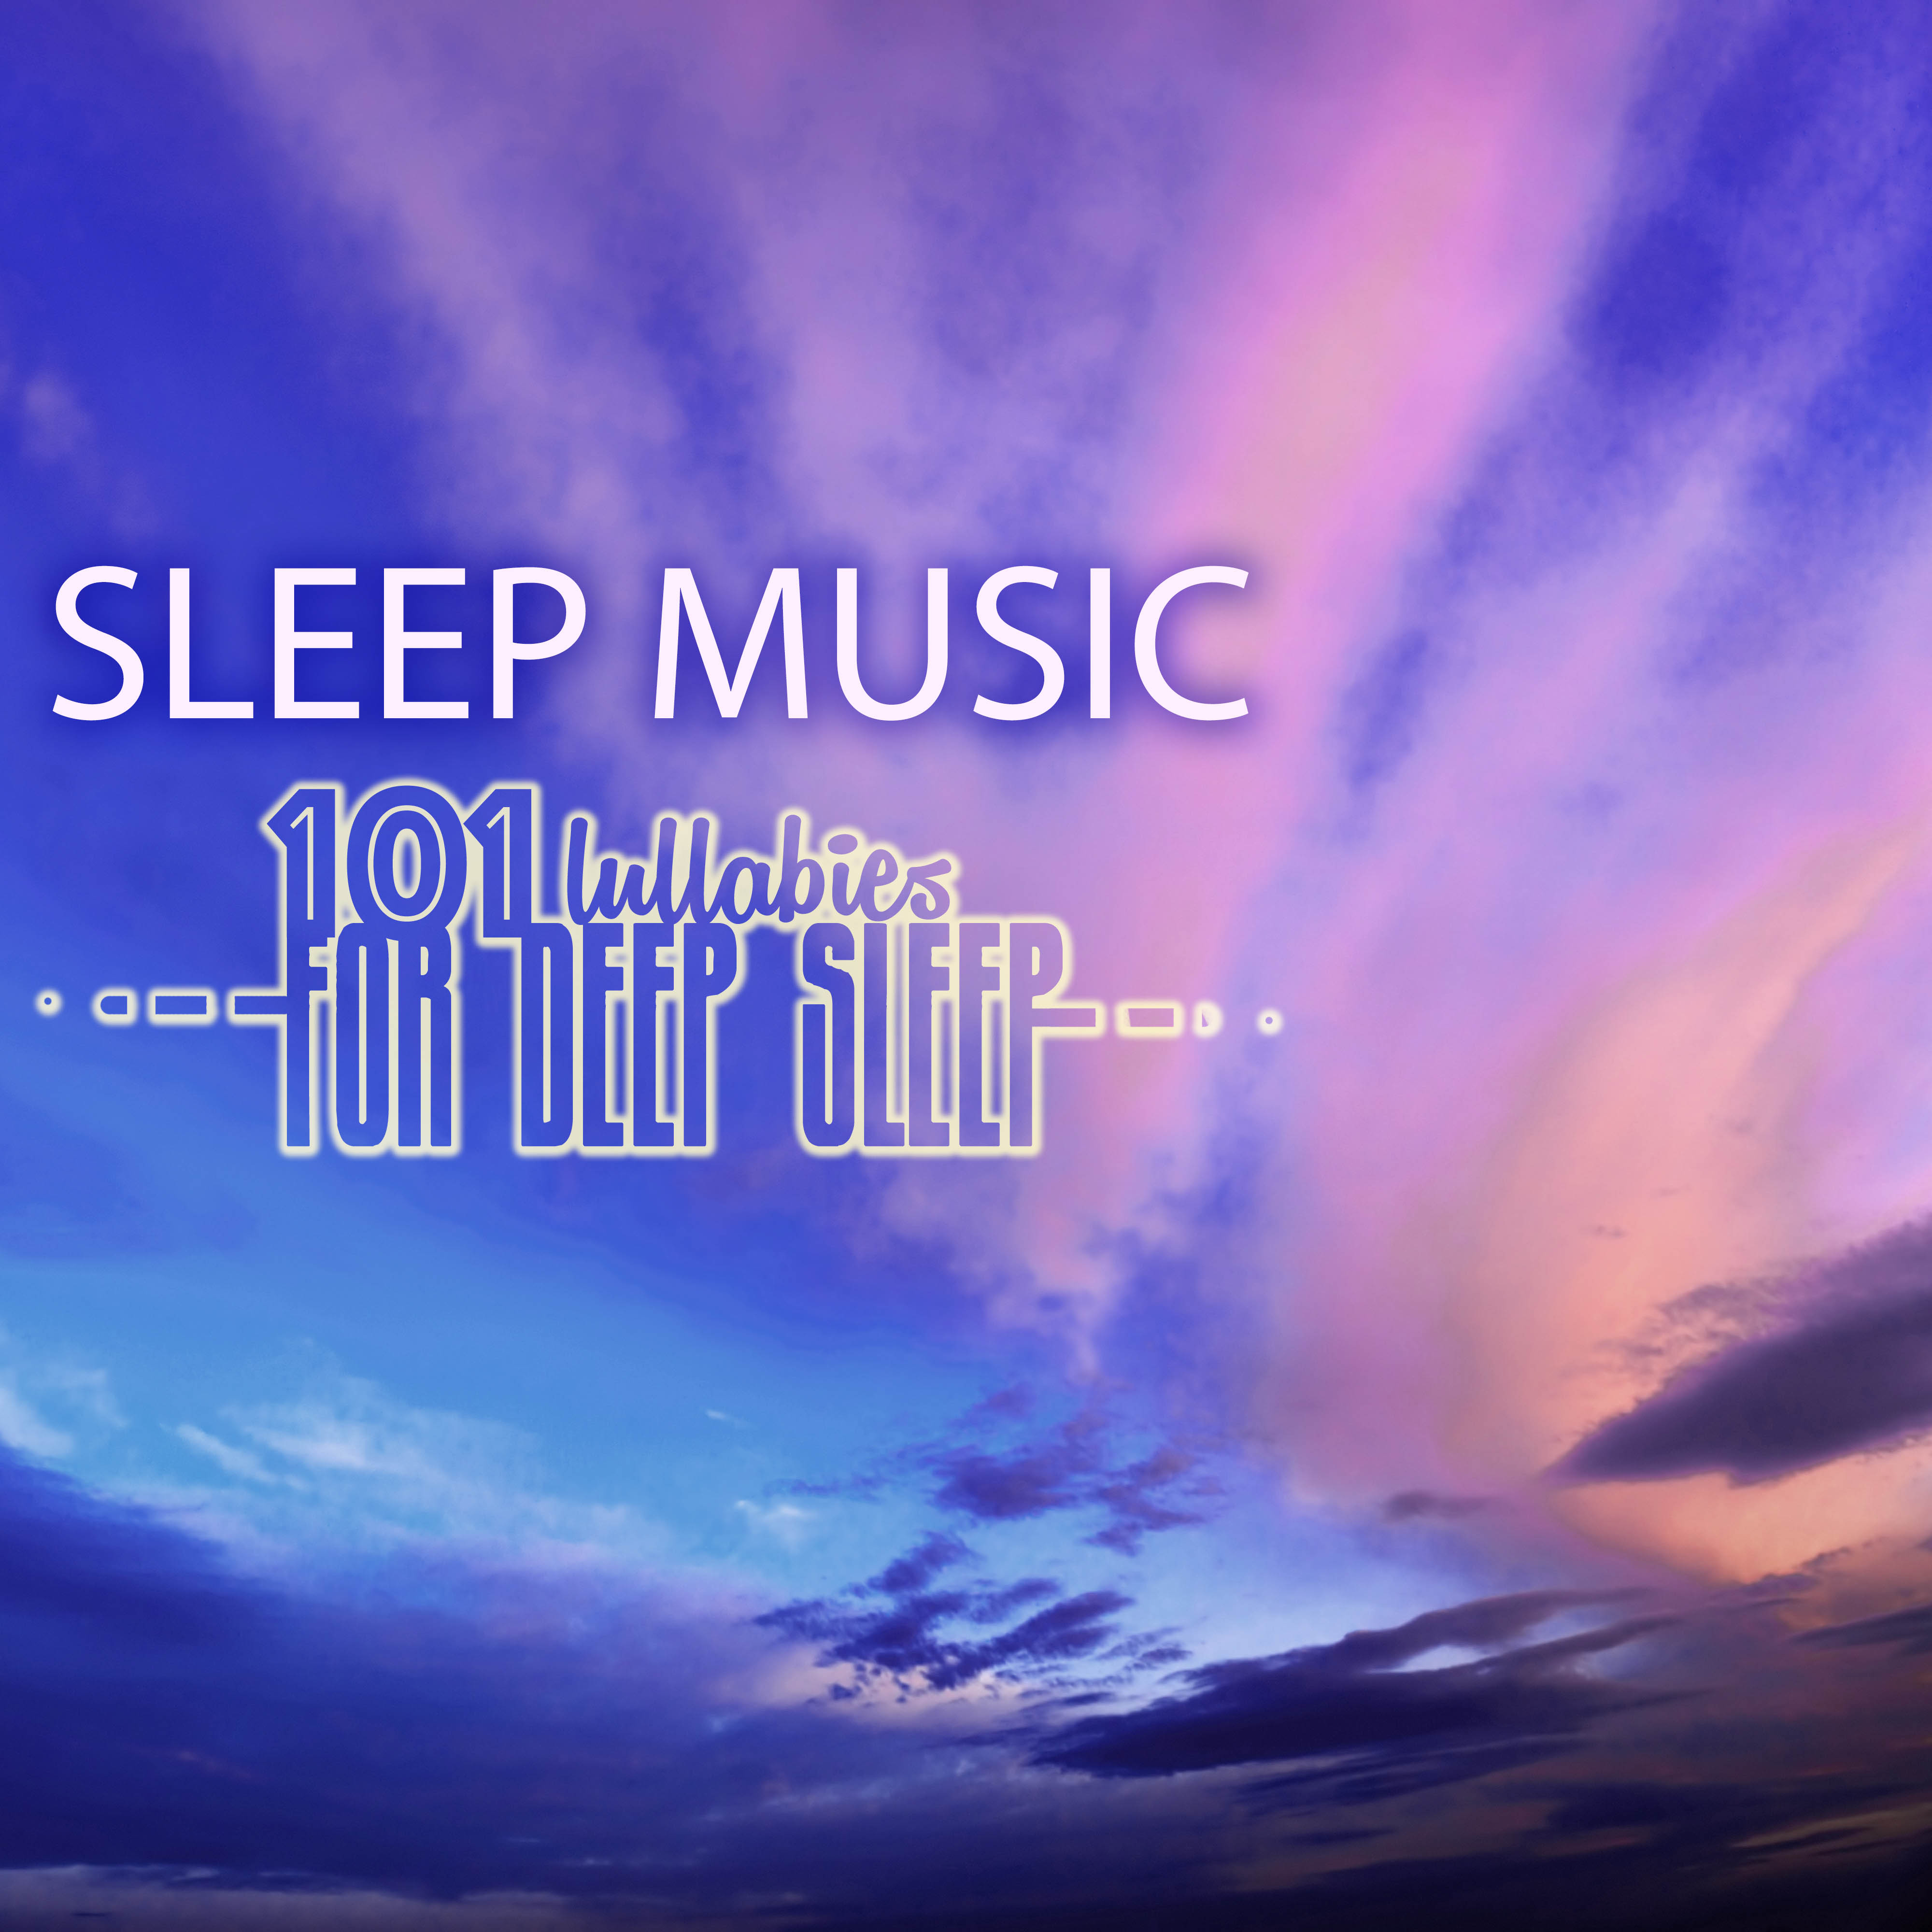 101 Sleep Music Lullabies for Deep Sleep - Regulate Your Cycle, Improve REM Sleeping Stage with Relaxing Songs